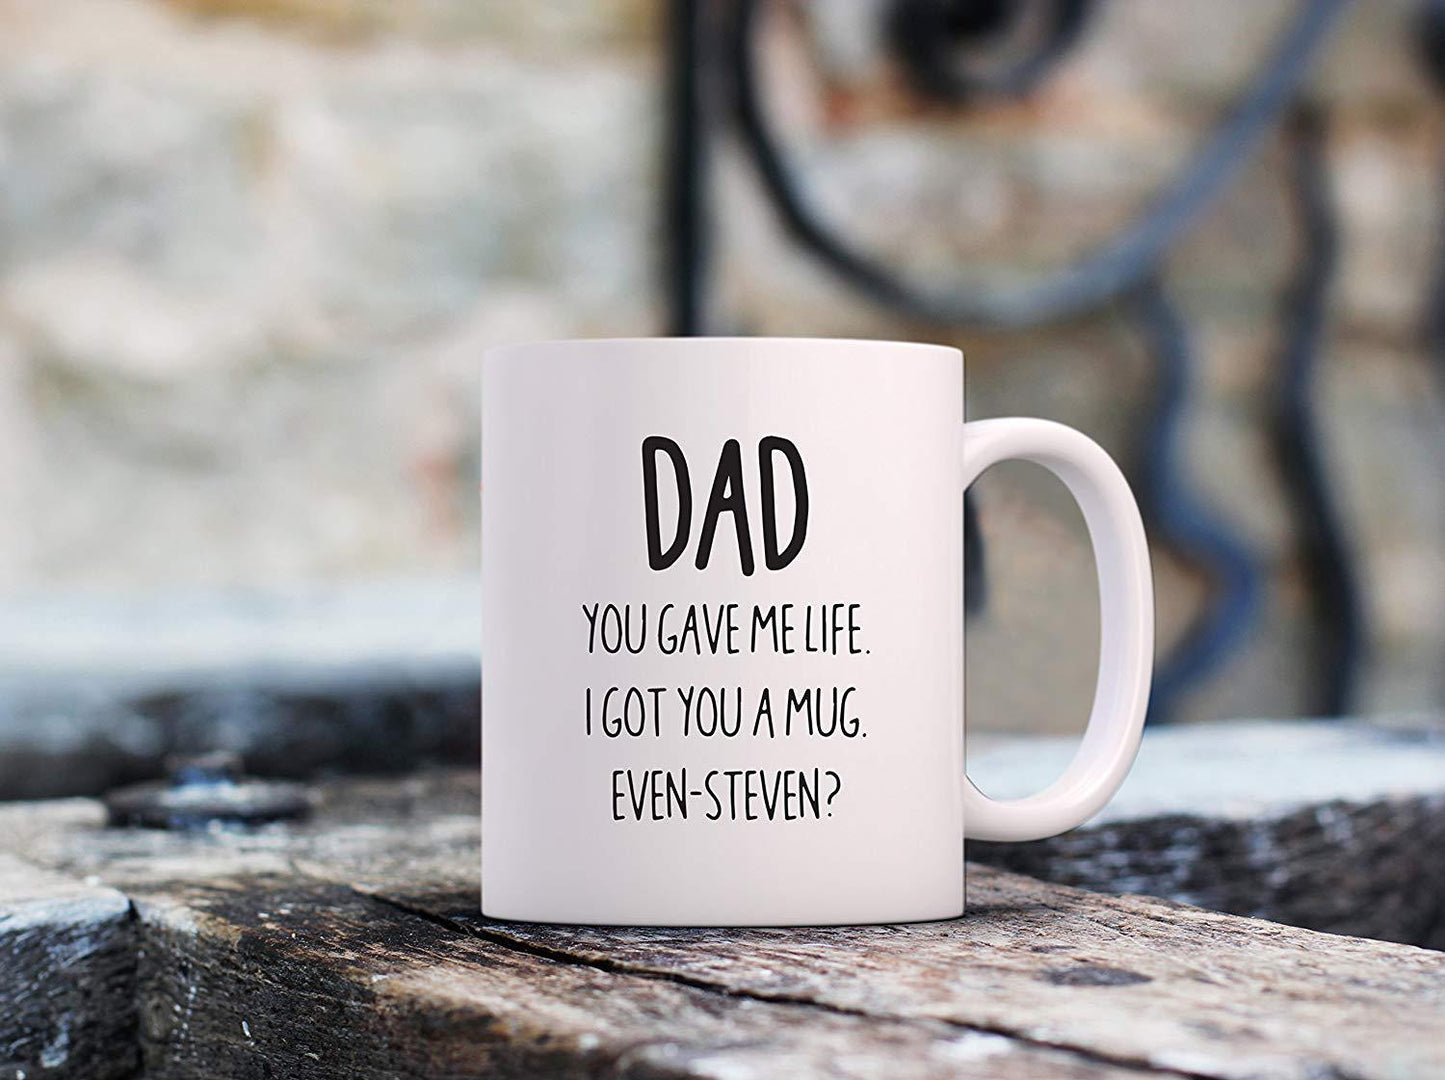 Father's Day Ceramic Coffee Mug